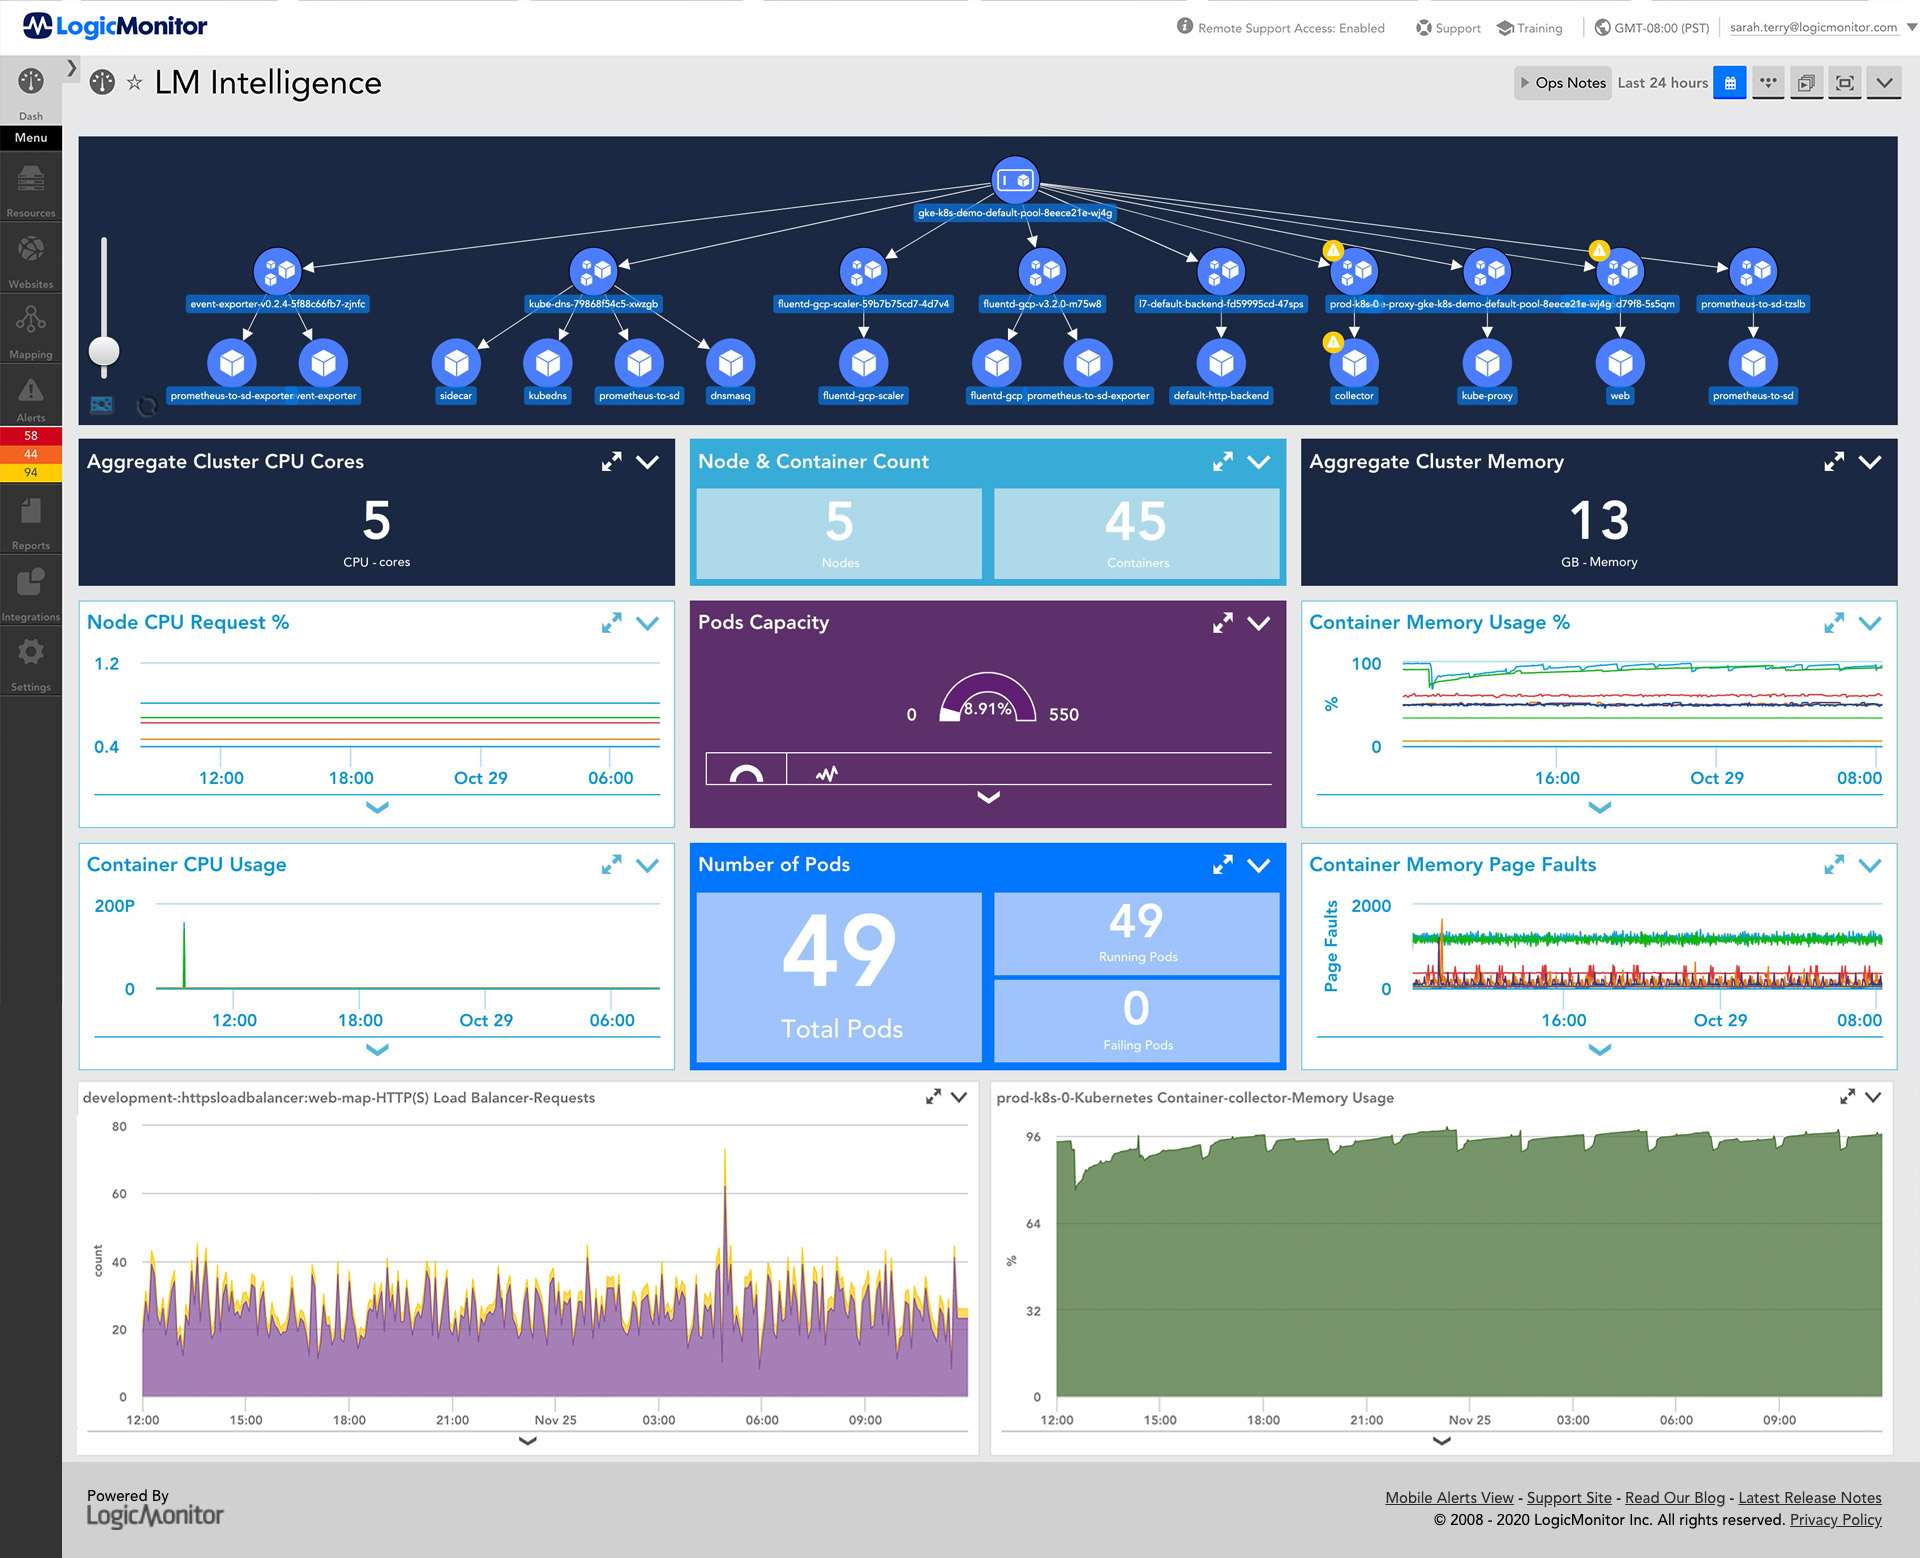 LM Intelligence Enterprise performance monitoring dashboard showcasing AIOps capabilities of LogicMonitor